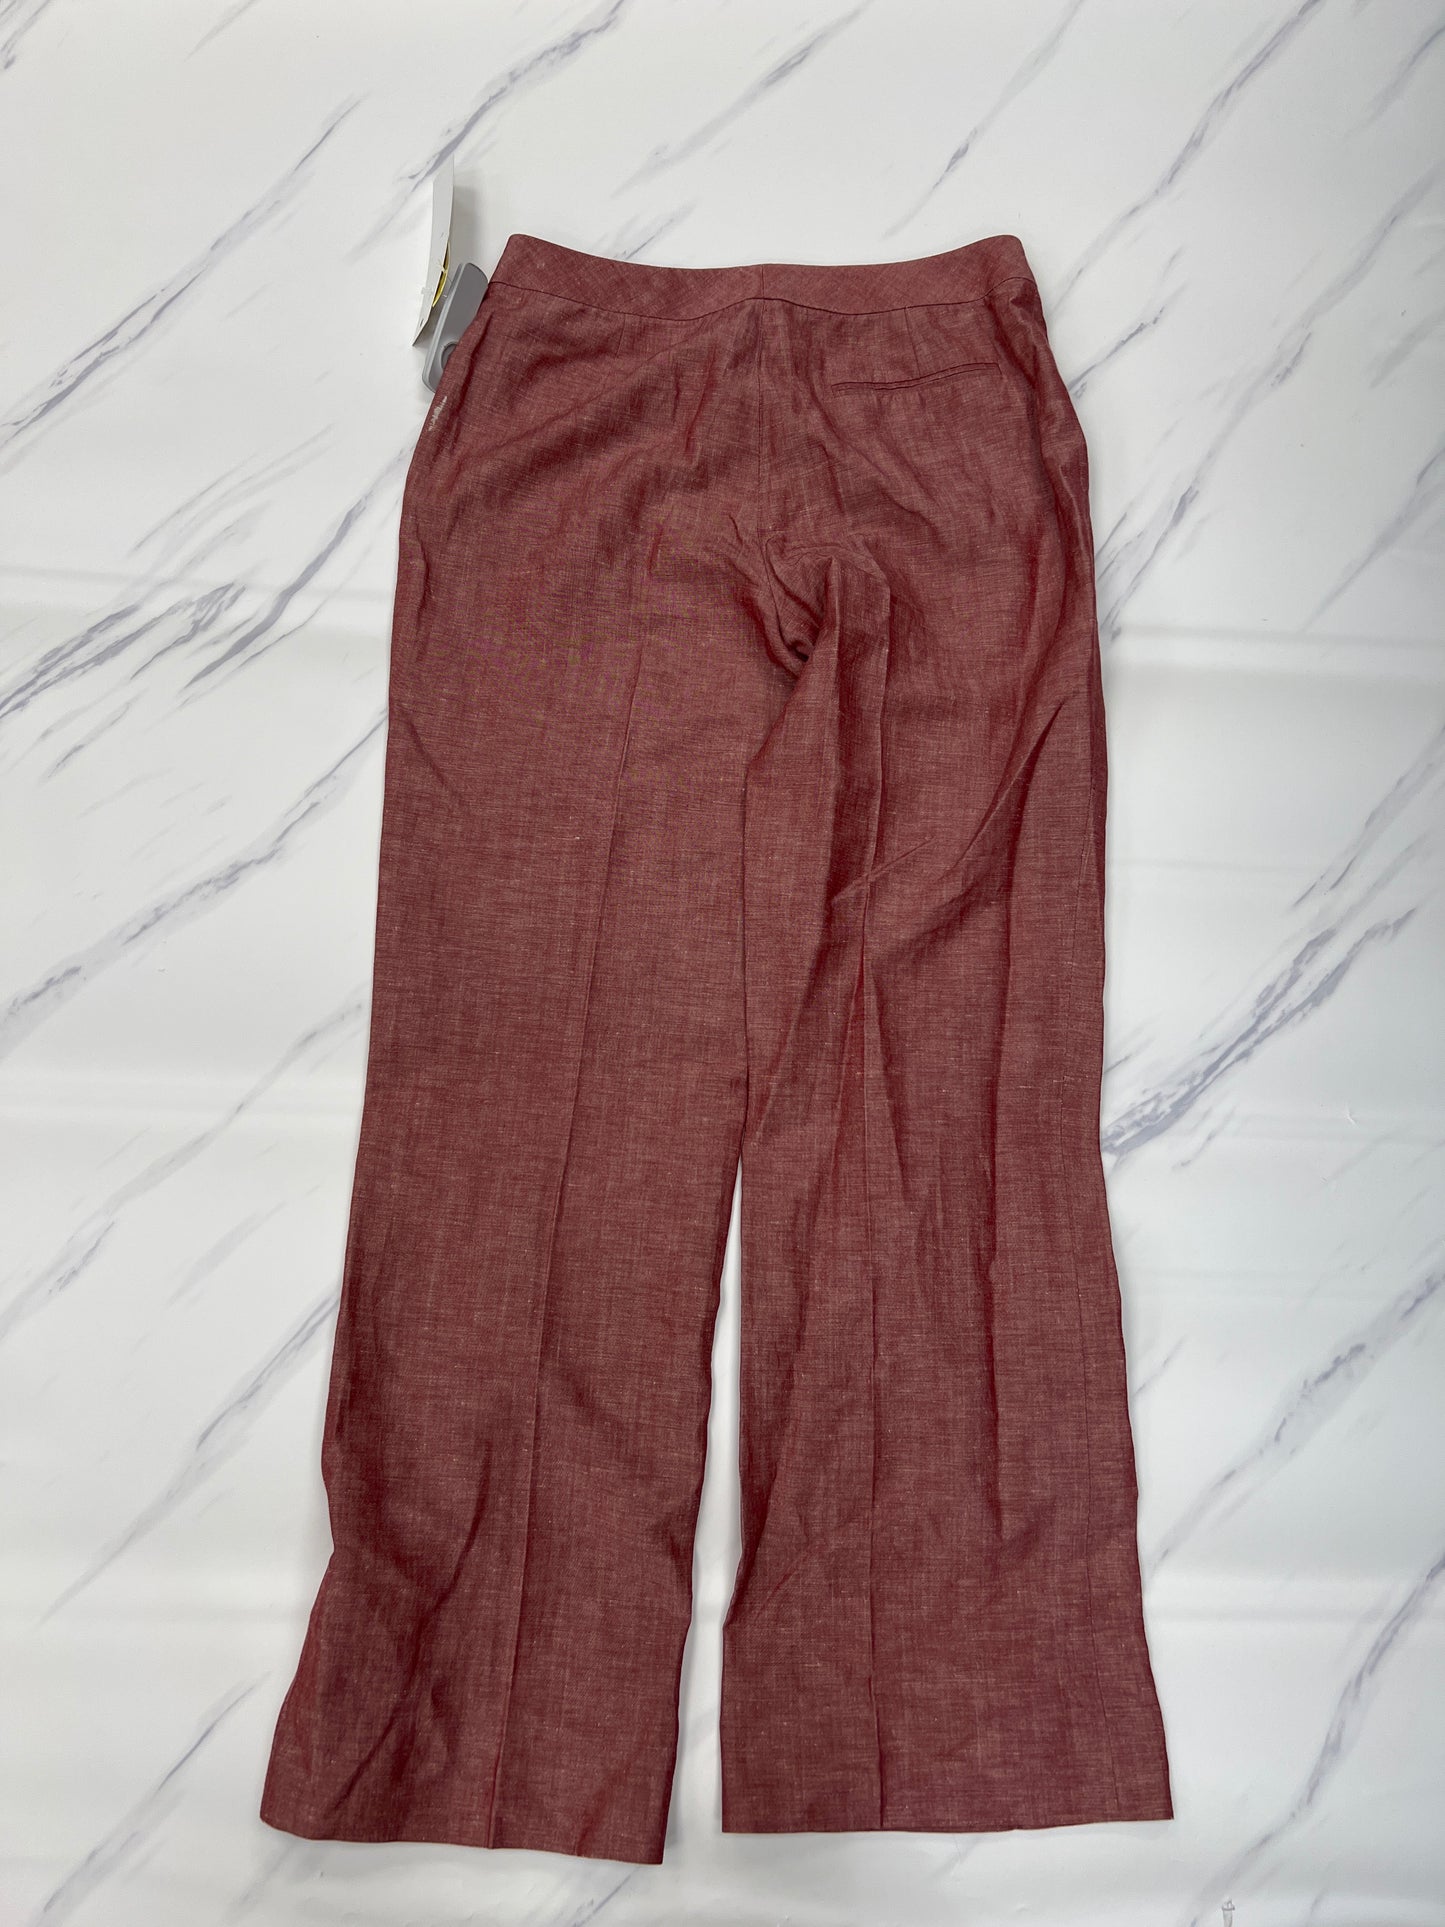 Pants Designer By Lafayette 148  Size: 4